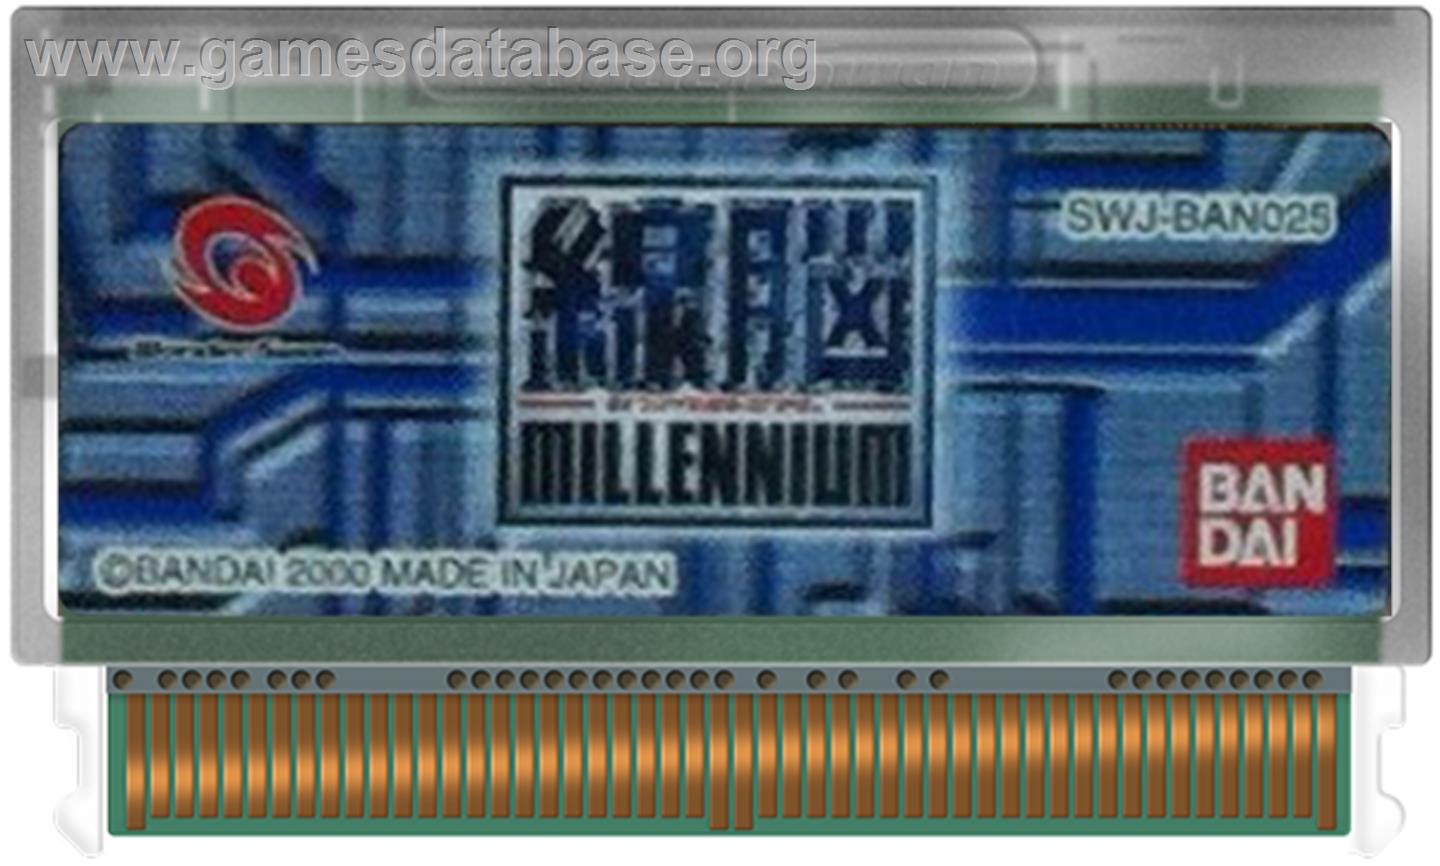 Langrisser Millennium - Bandai WonderSwan - Artwork - Cartridge